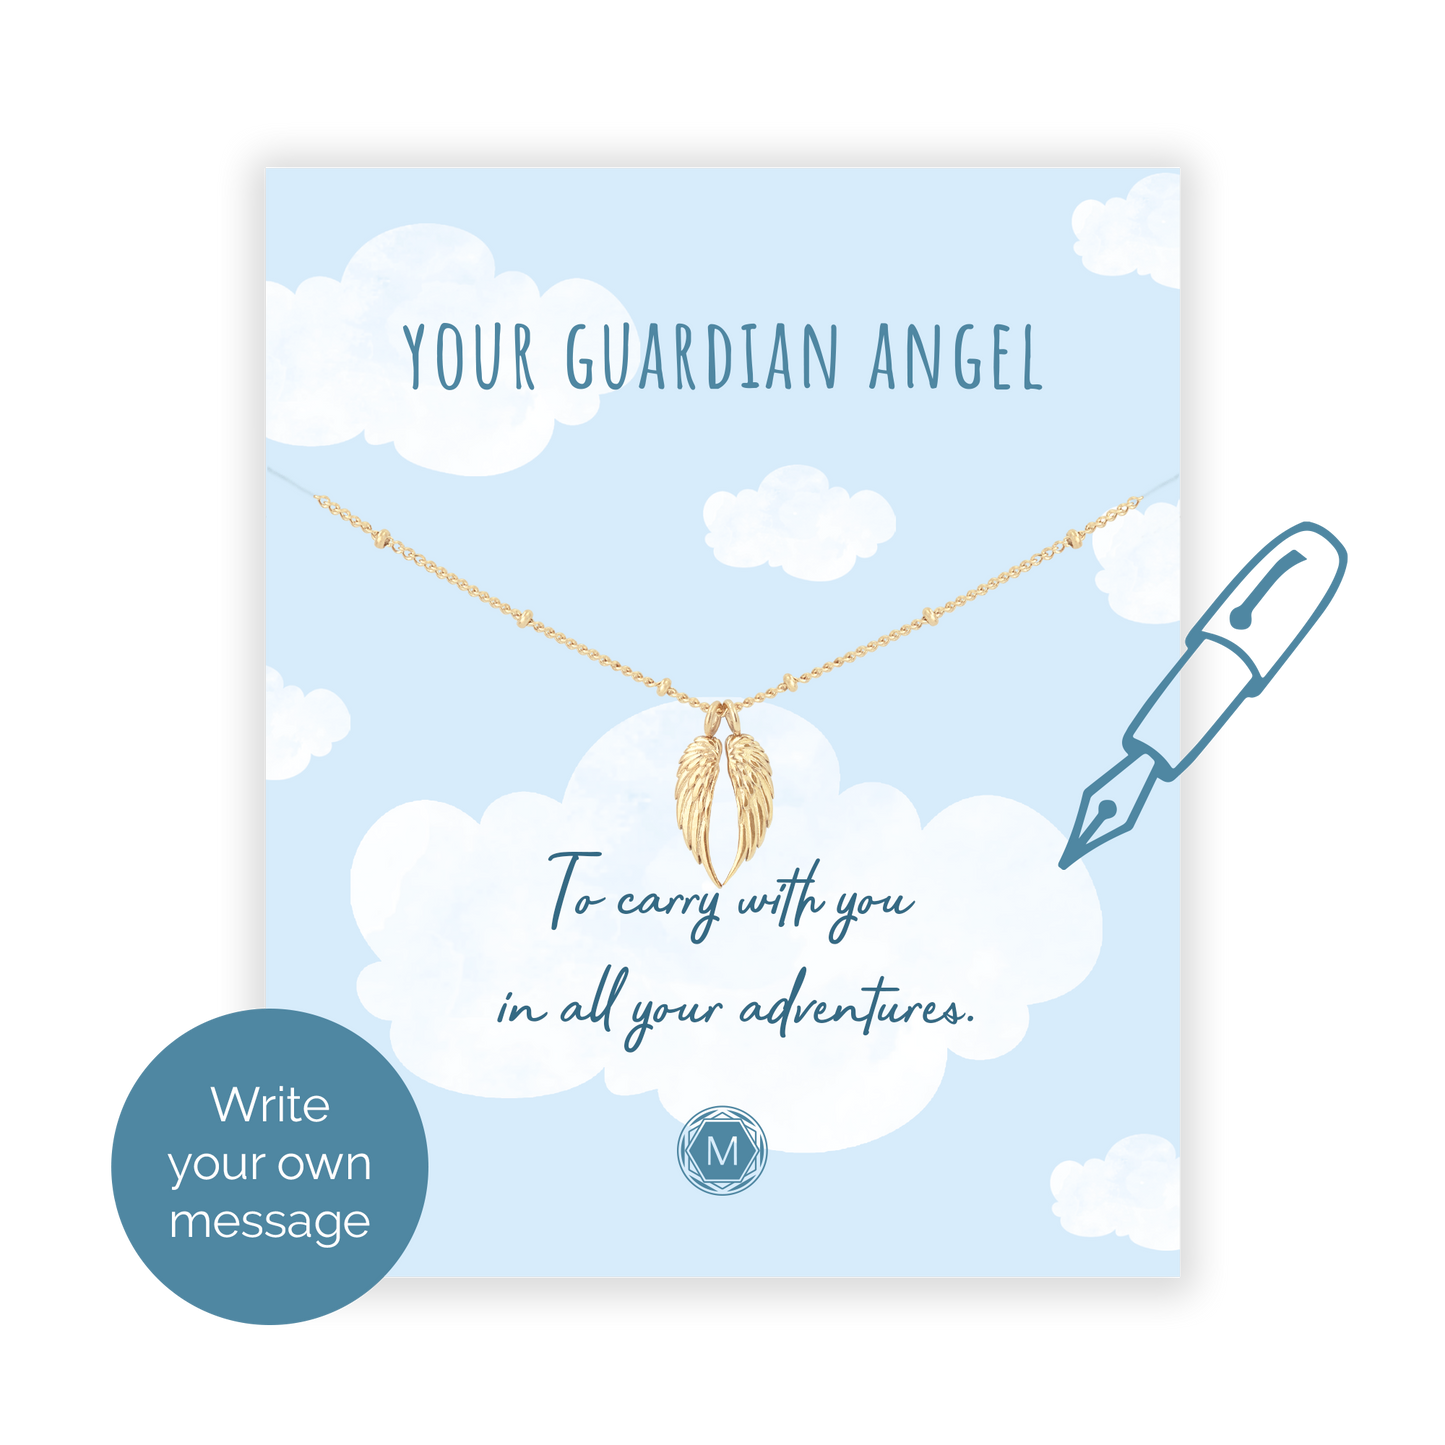 YOUR GUARDIAN ANGEL Armband